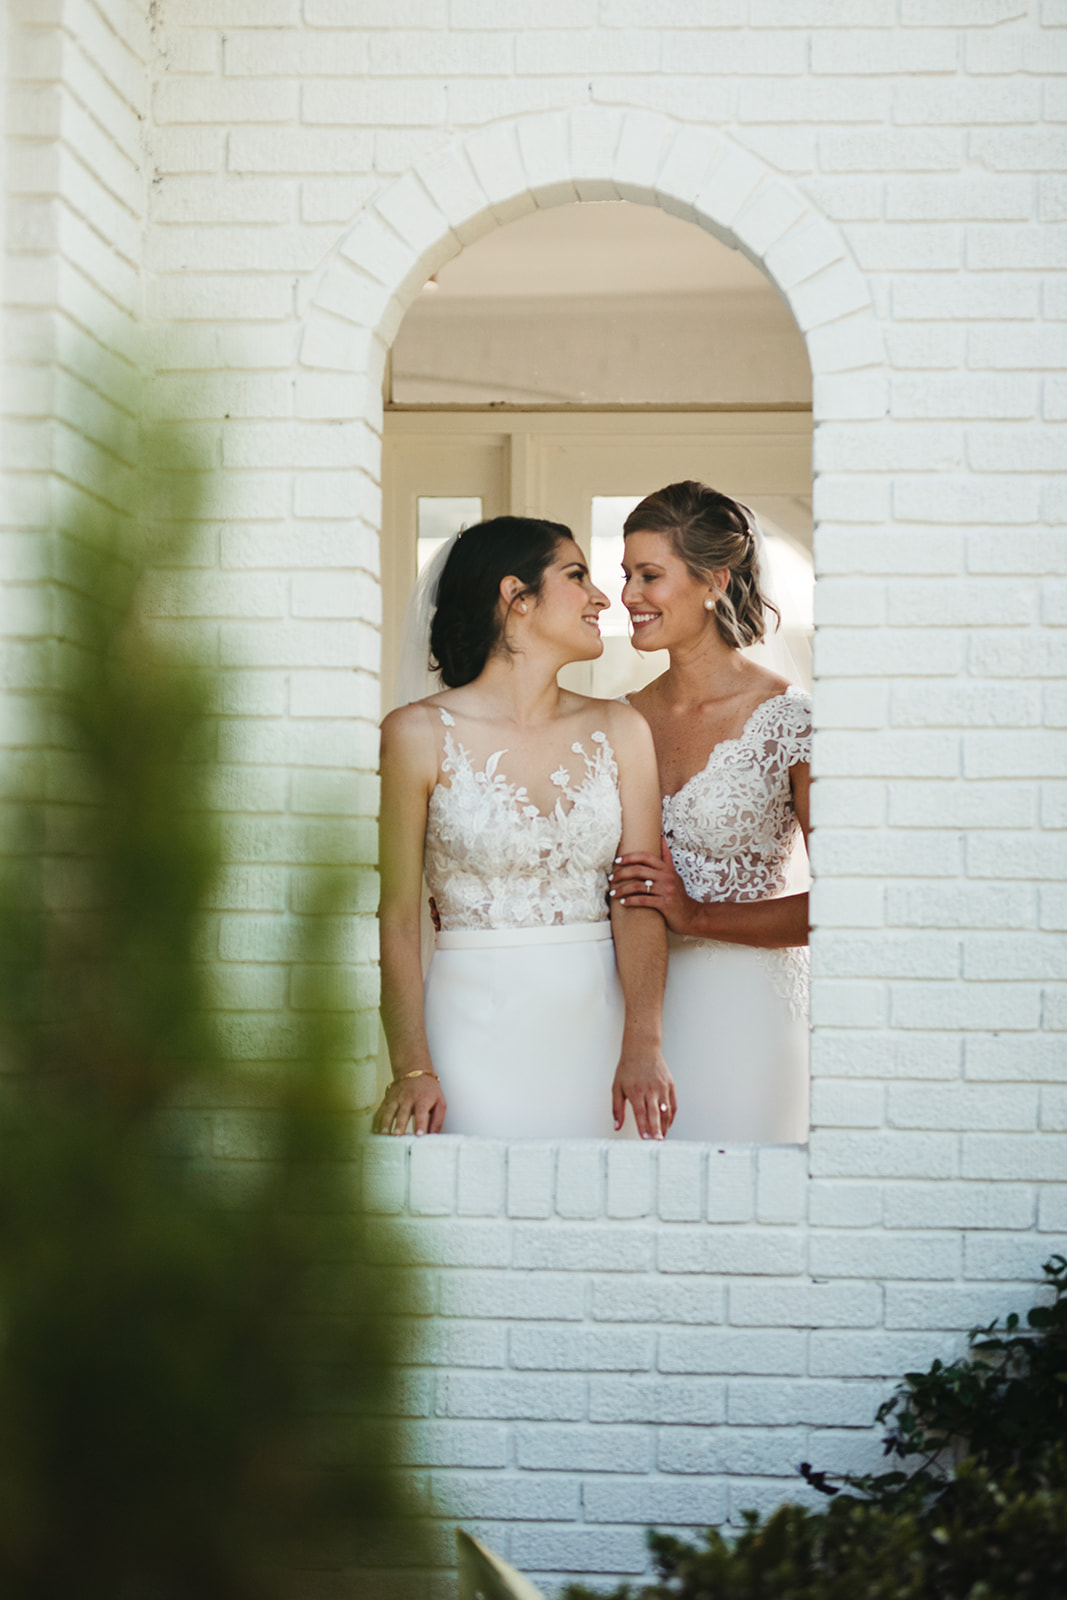 Queer wedding photographer ideas